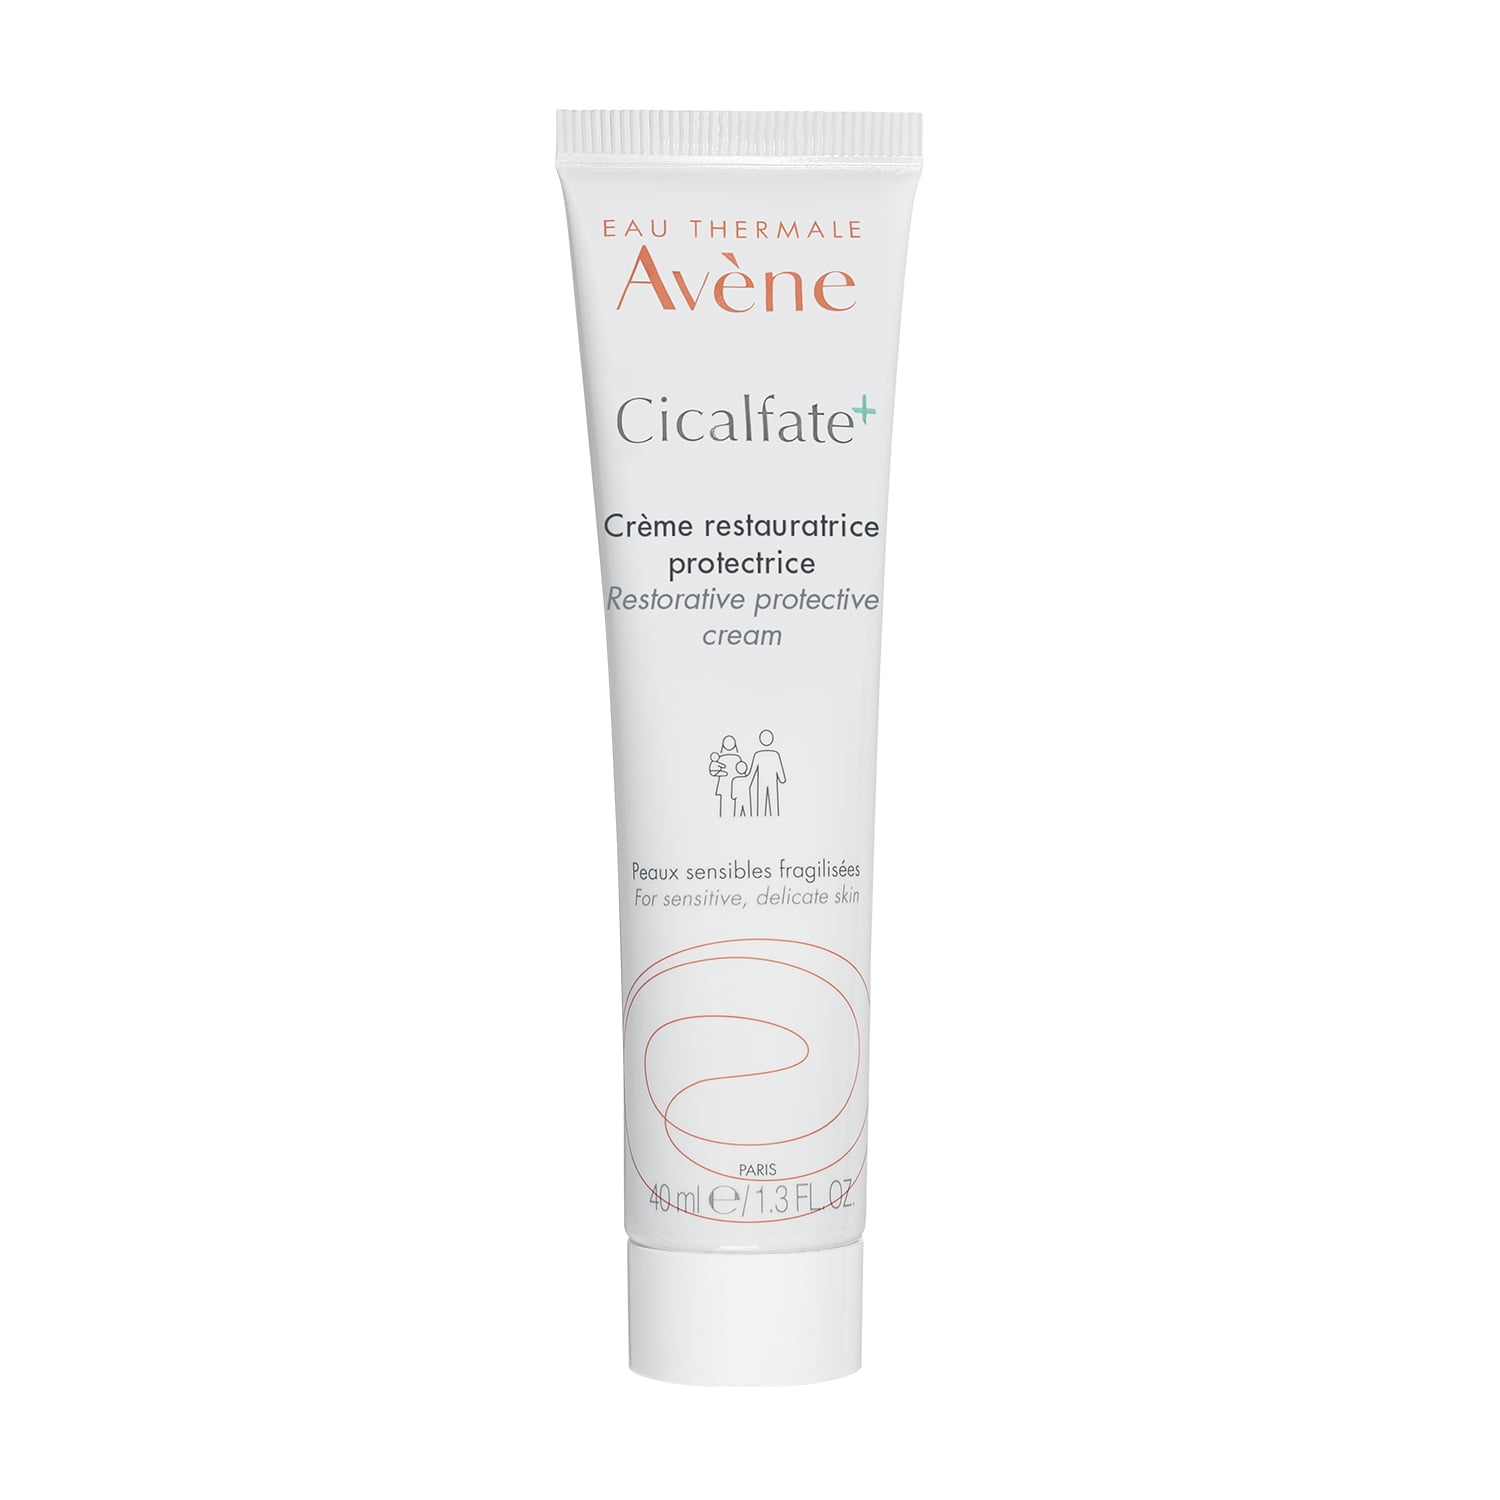 Avene Cicalfate+ Protective Cream, Restorative, Fragrance-free - 1.3 fl oz